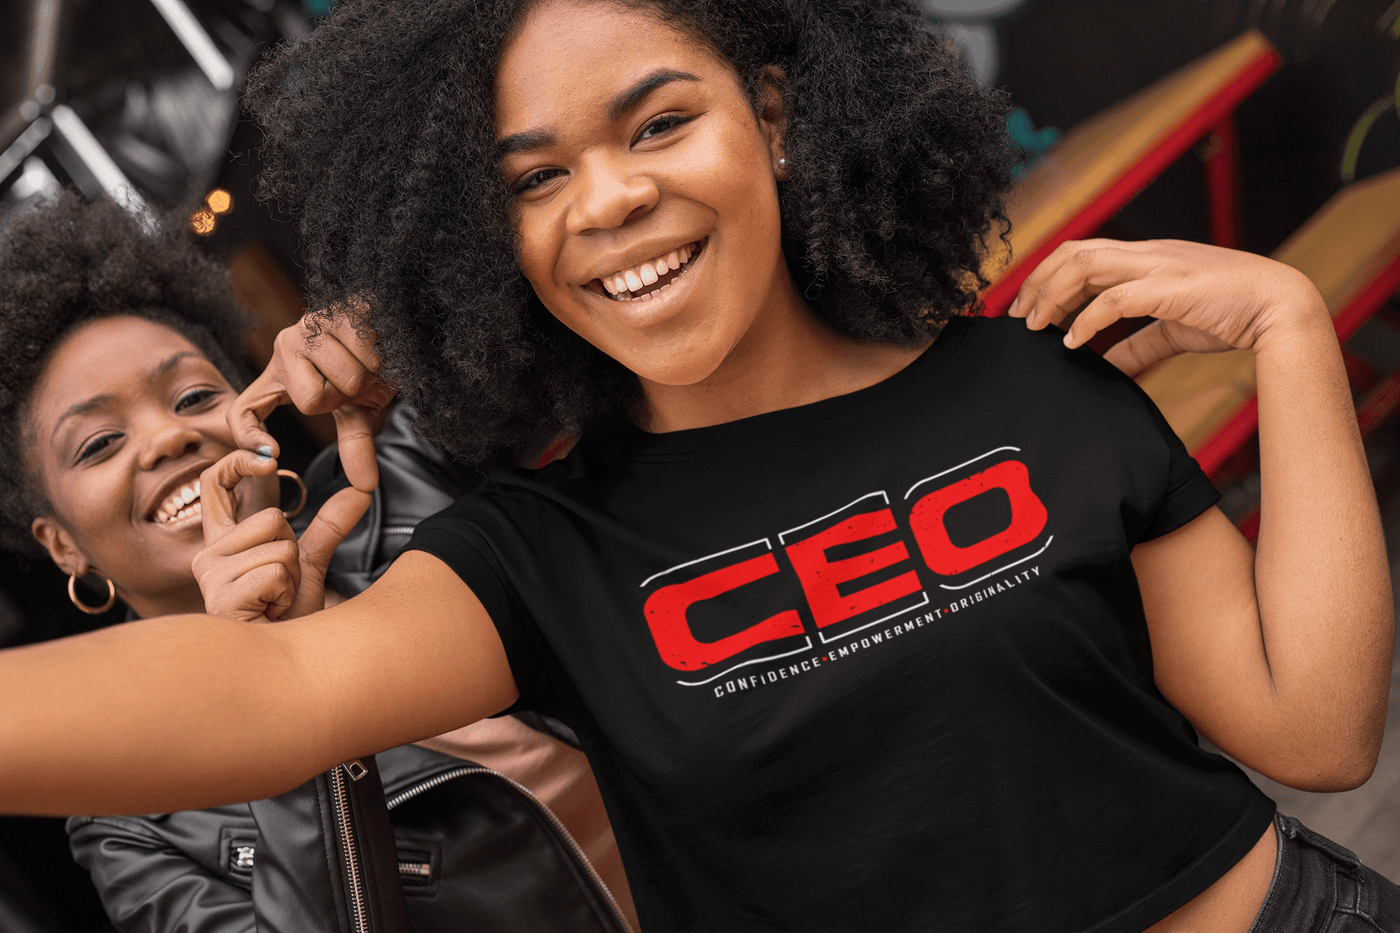 CEO | Women's Empowerment T-Shirt - Statement Piece NY